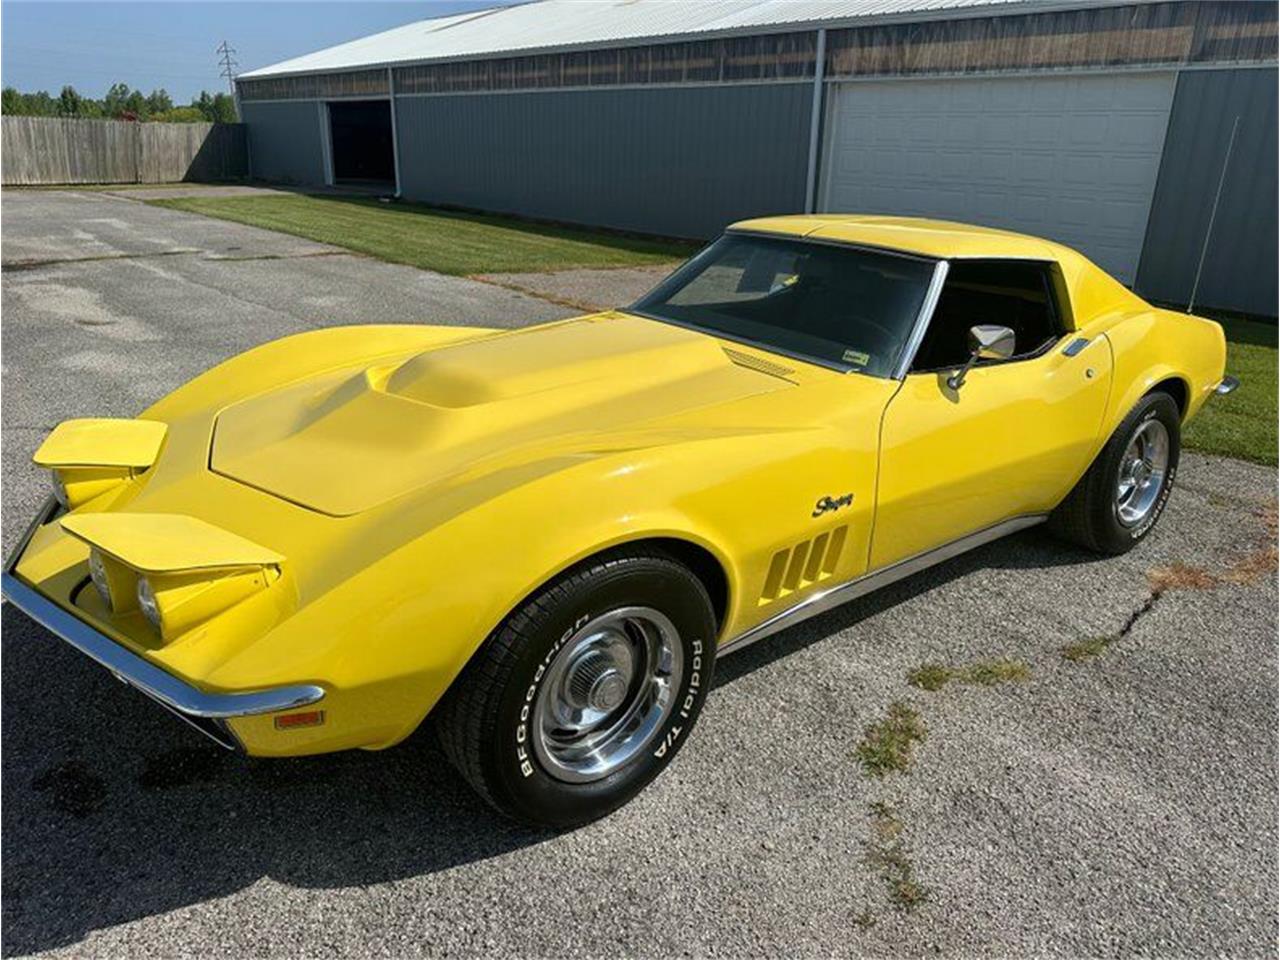 For Sale: 1969 Chevrolet Corvette in Staunton, Illinois for sale in Staunton, IL